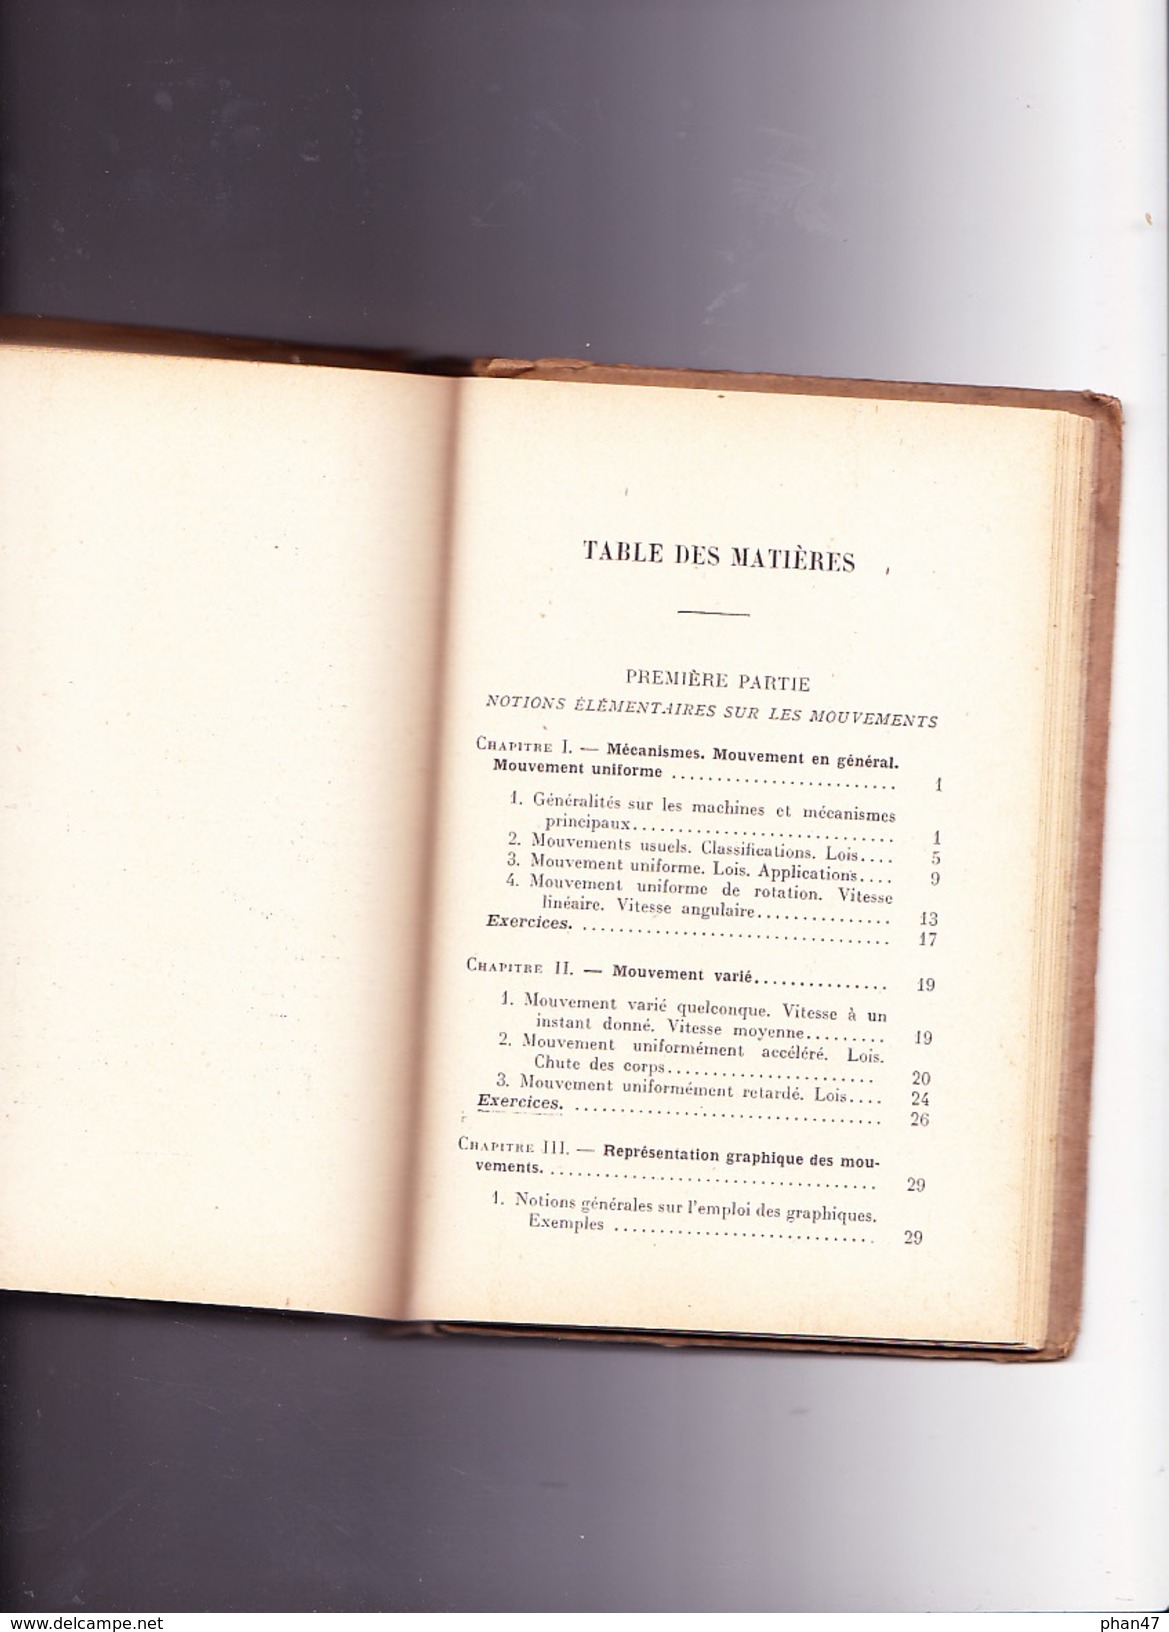 MECANISMES USUELS, F. HARANG Manuel d'Enseignement Technique V. Vardon, Ed. MASSON 1927